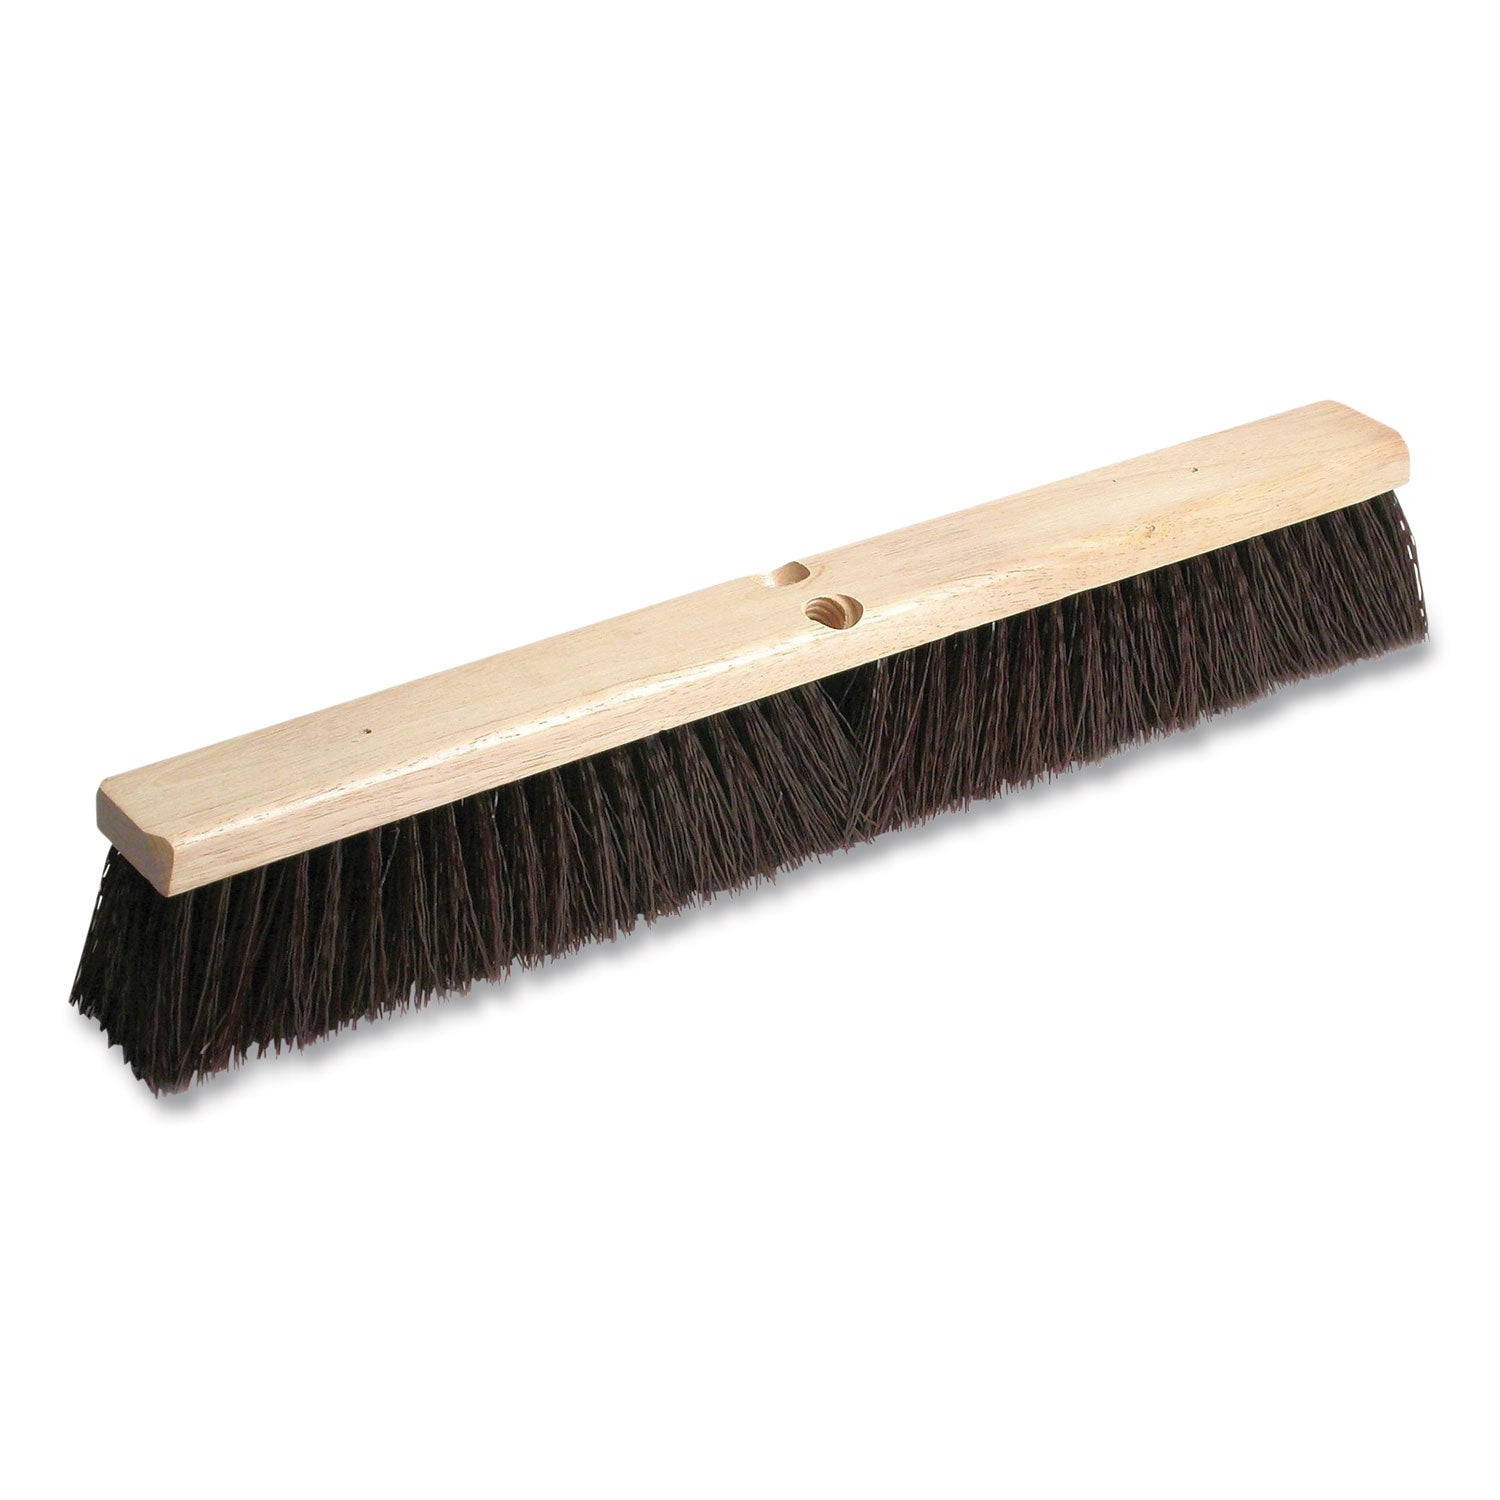 polypropylene-push-broom-head-3-maroon-bristles-24-brush_odcmp24 - 1